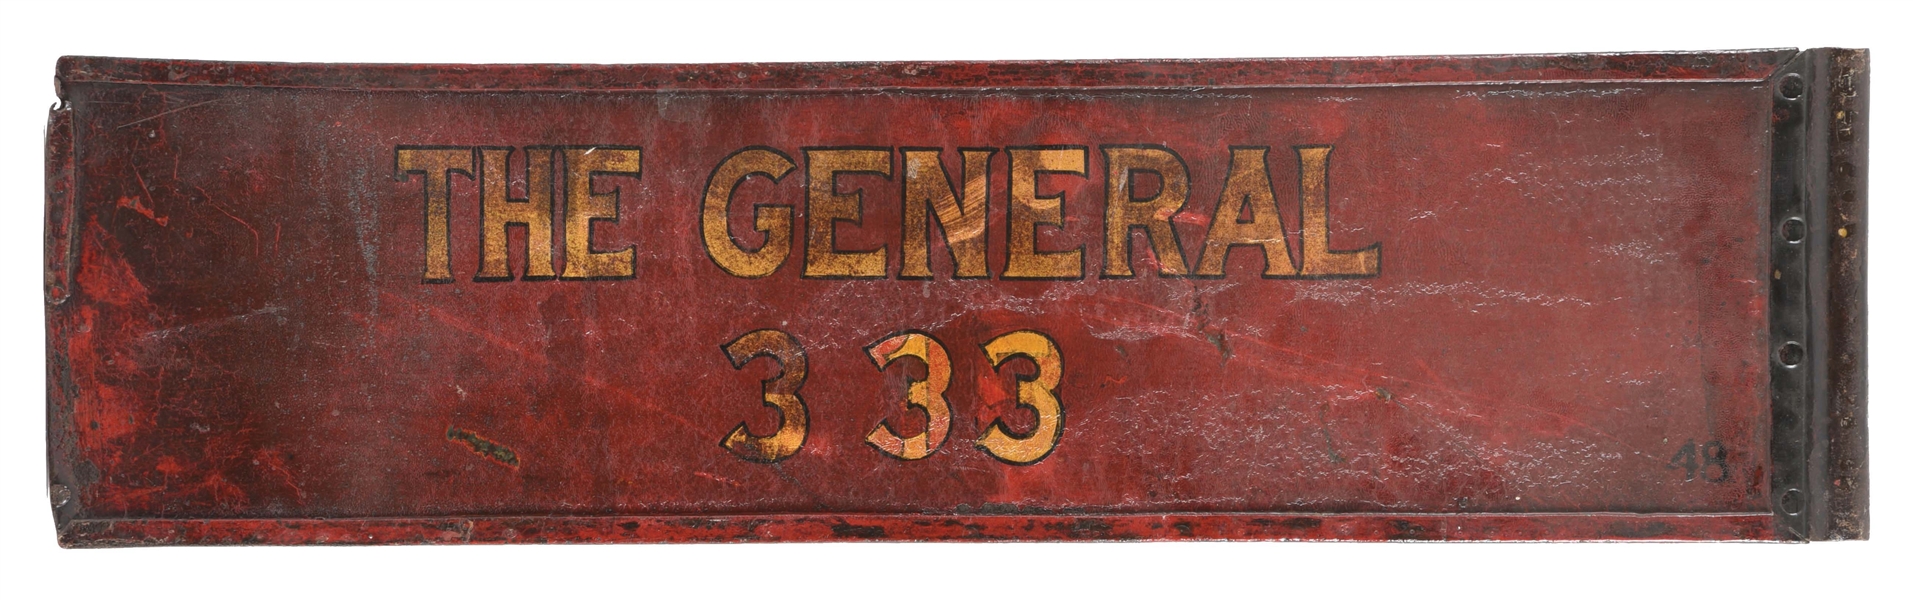 THE GENERAL 333 932 METAL RAILROAD GATE SIGN. 